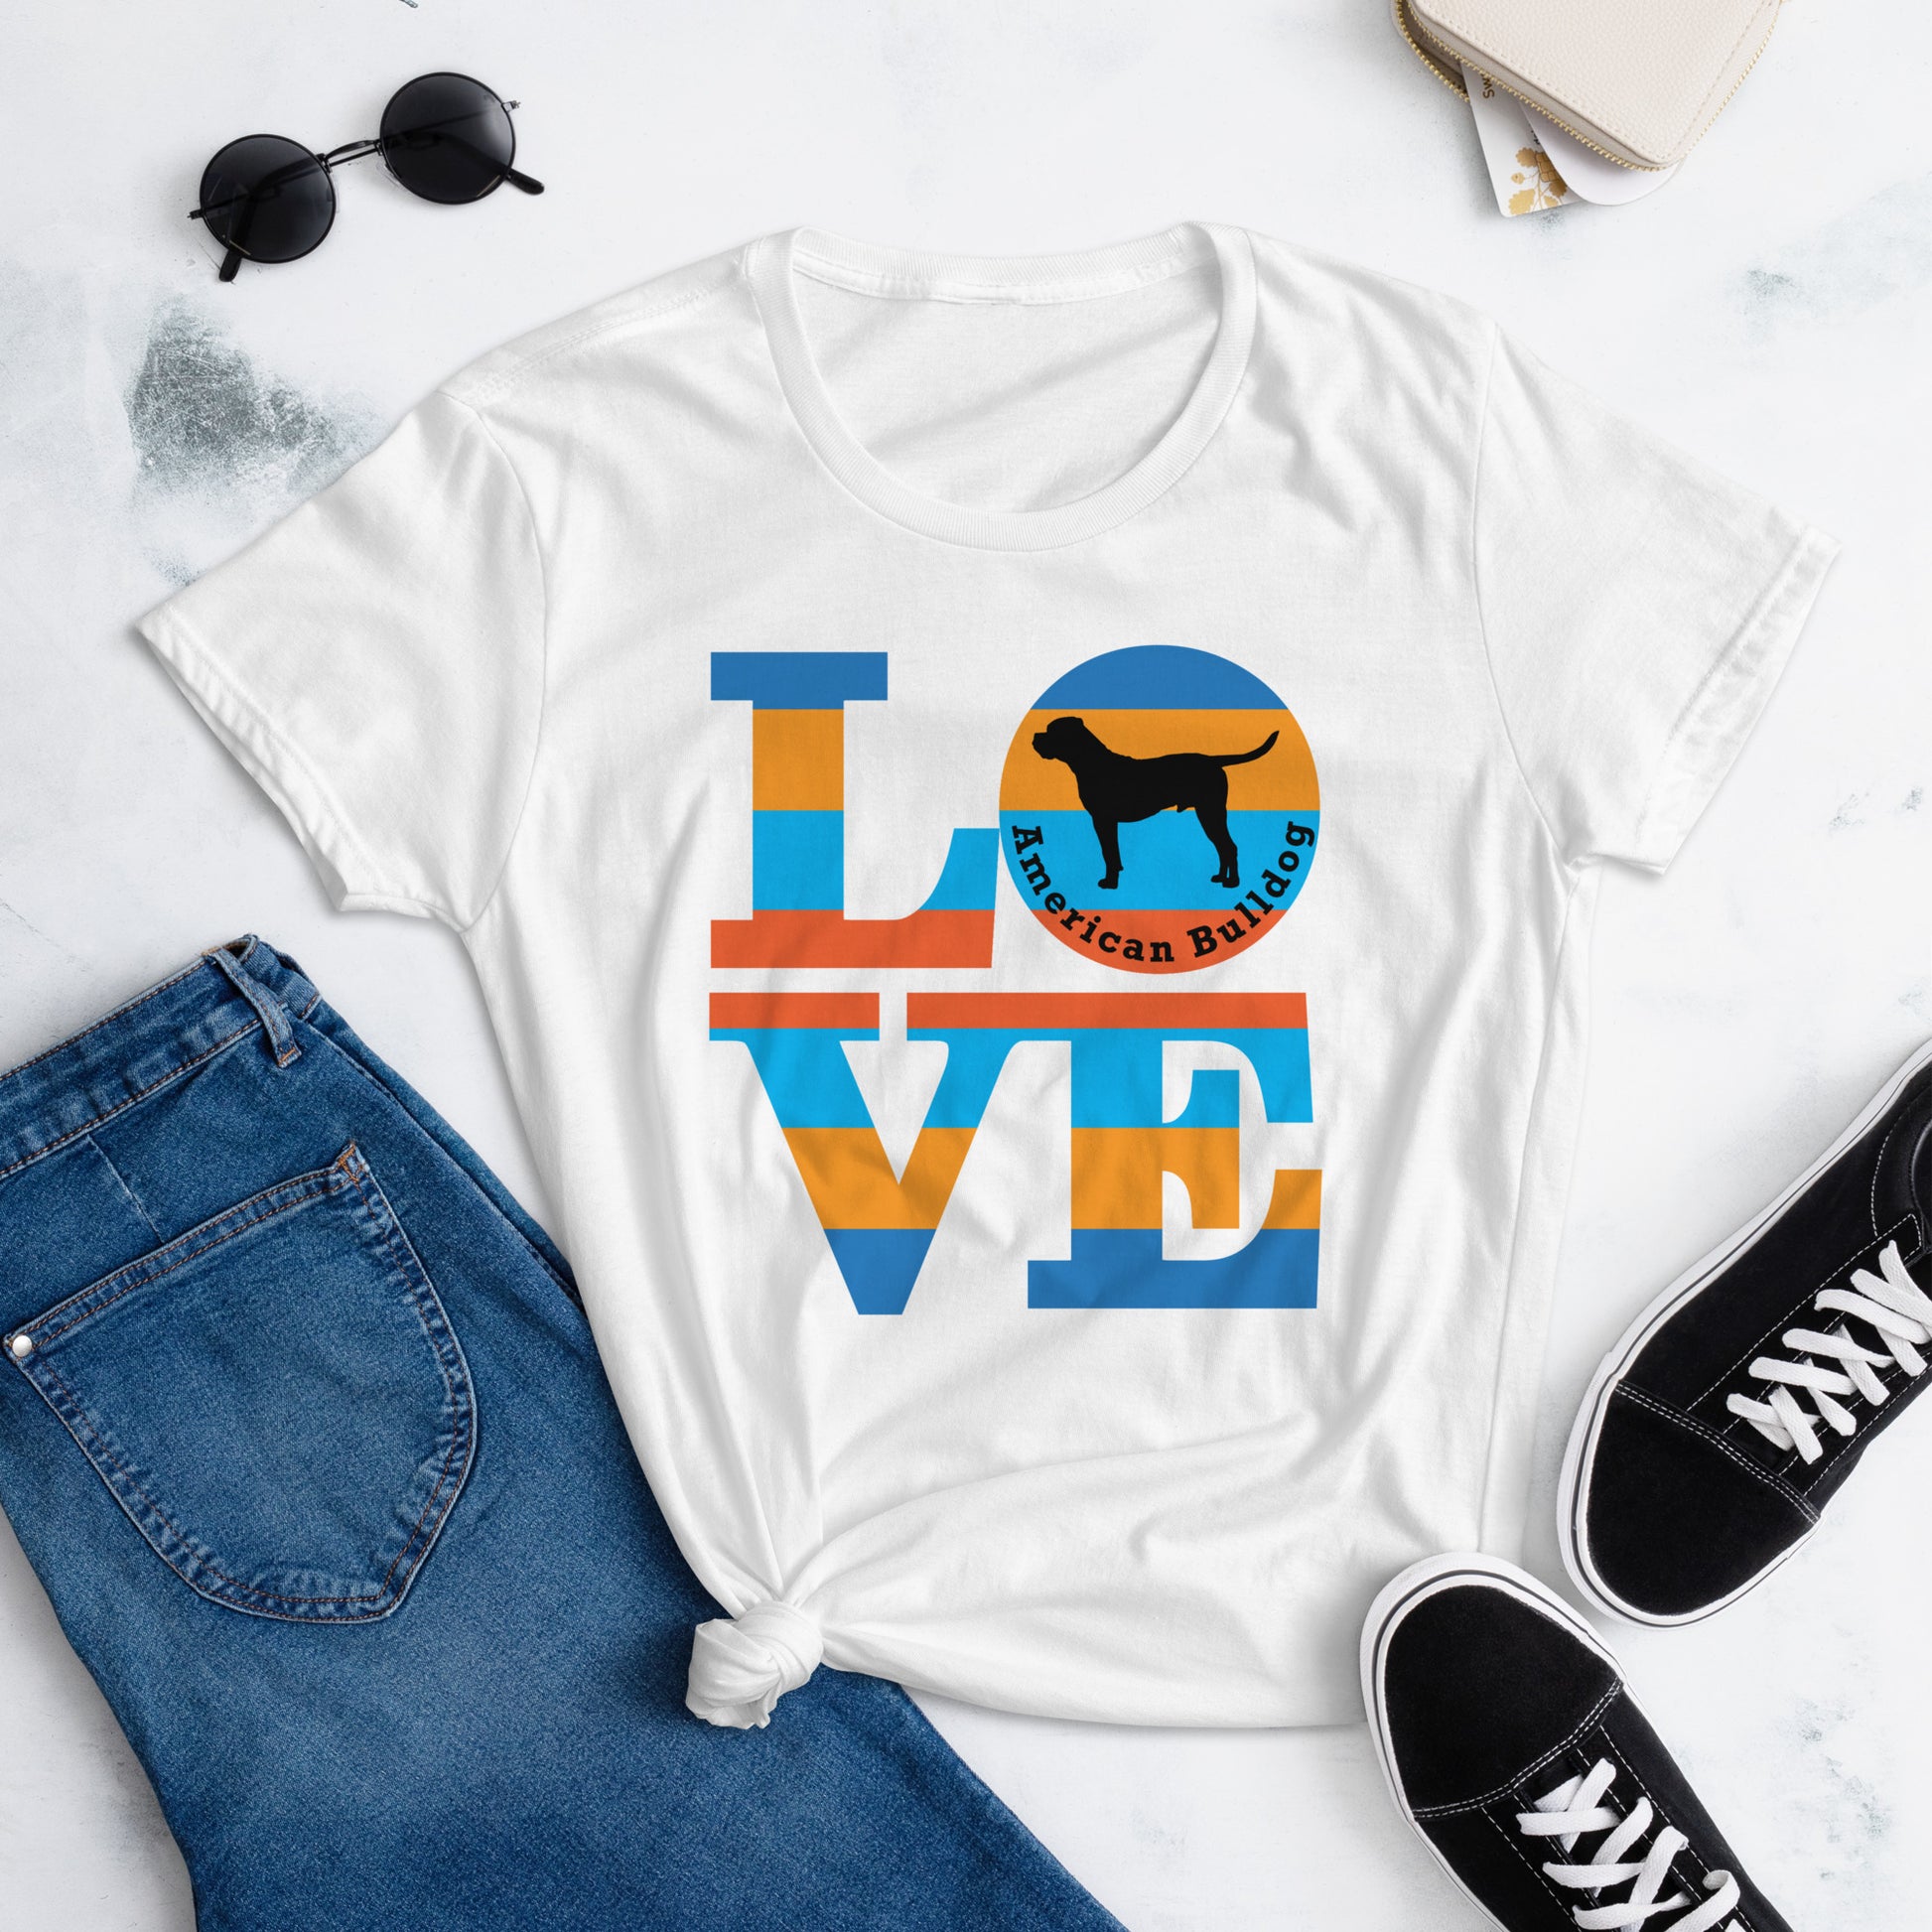 American Bulldog Love women’s white t-shirt by Dog Artistry.